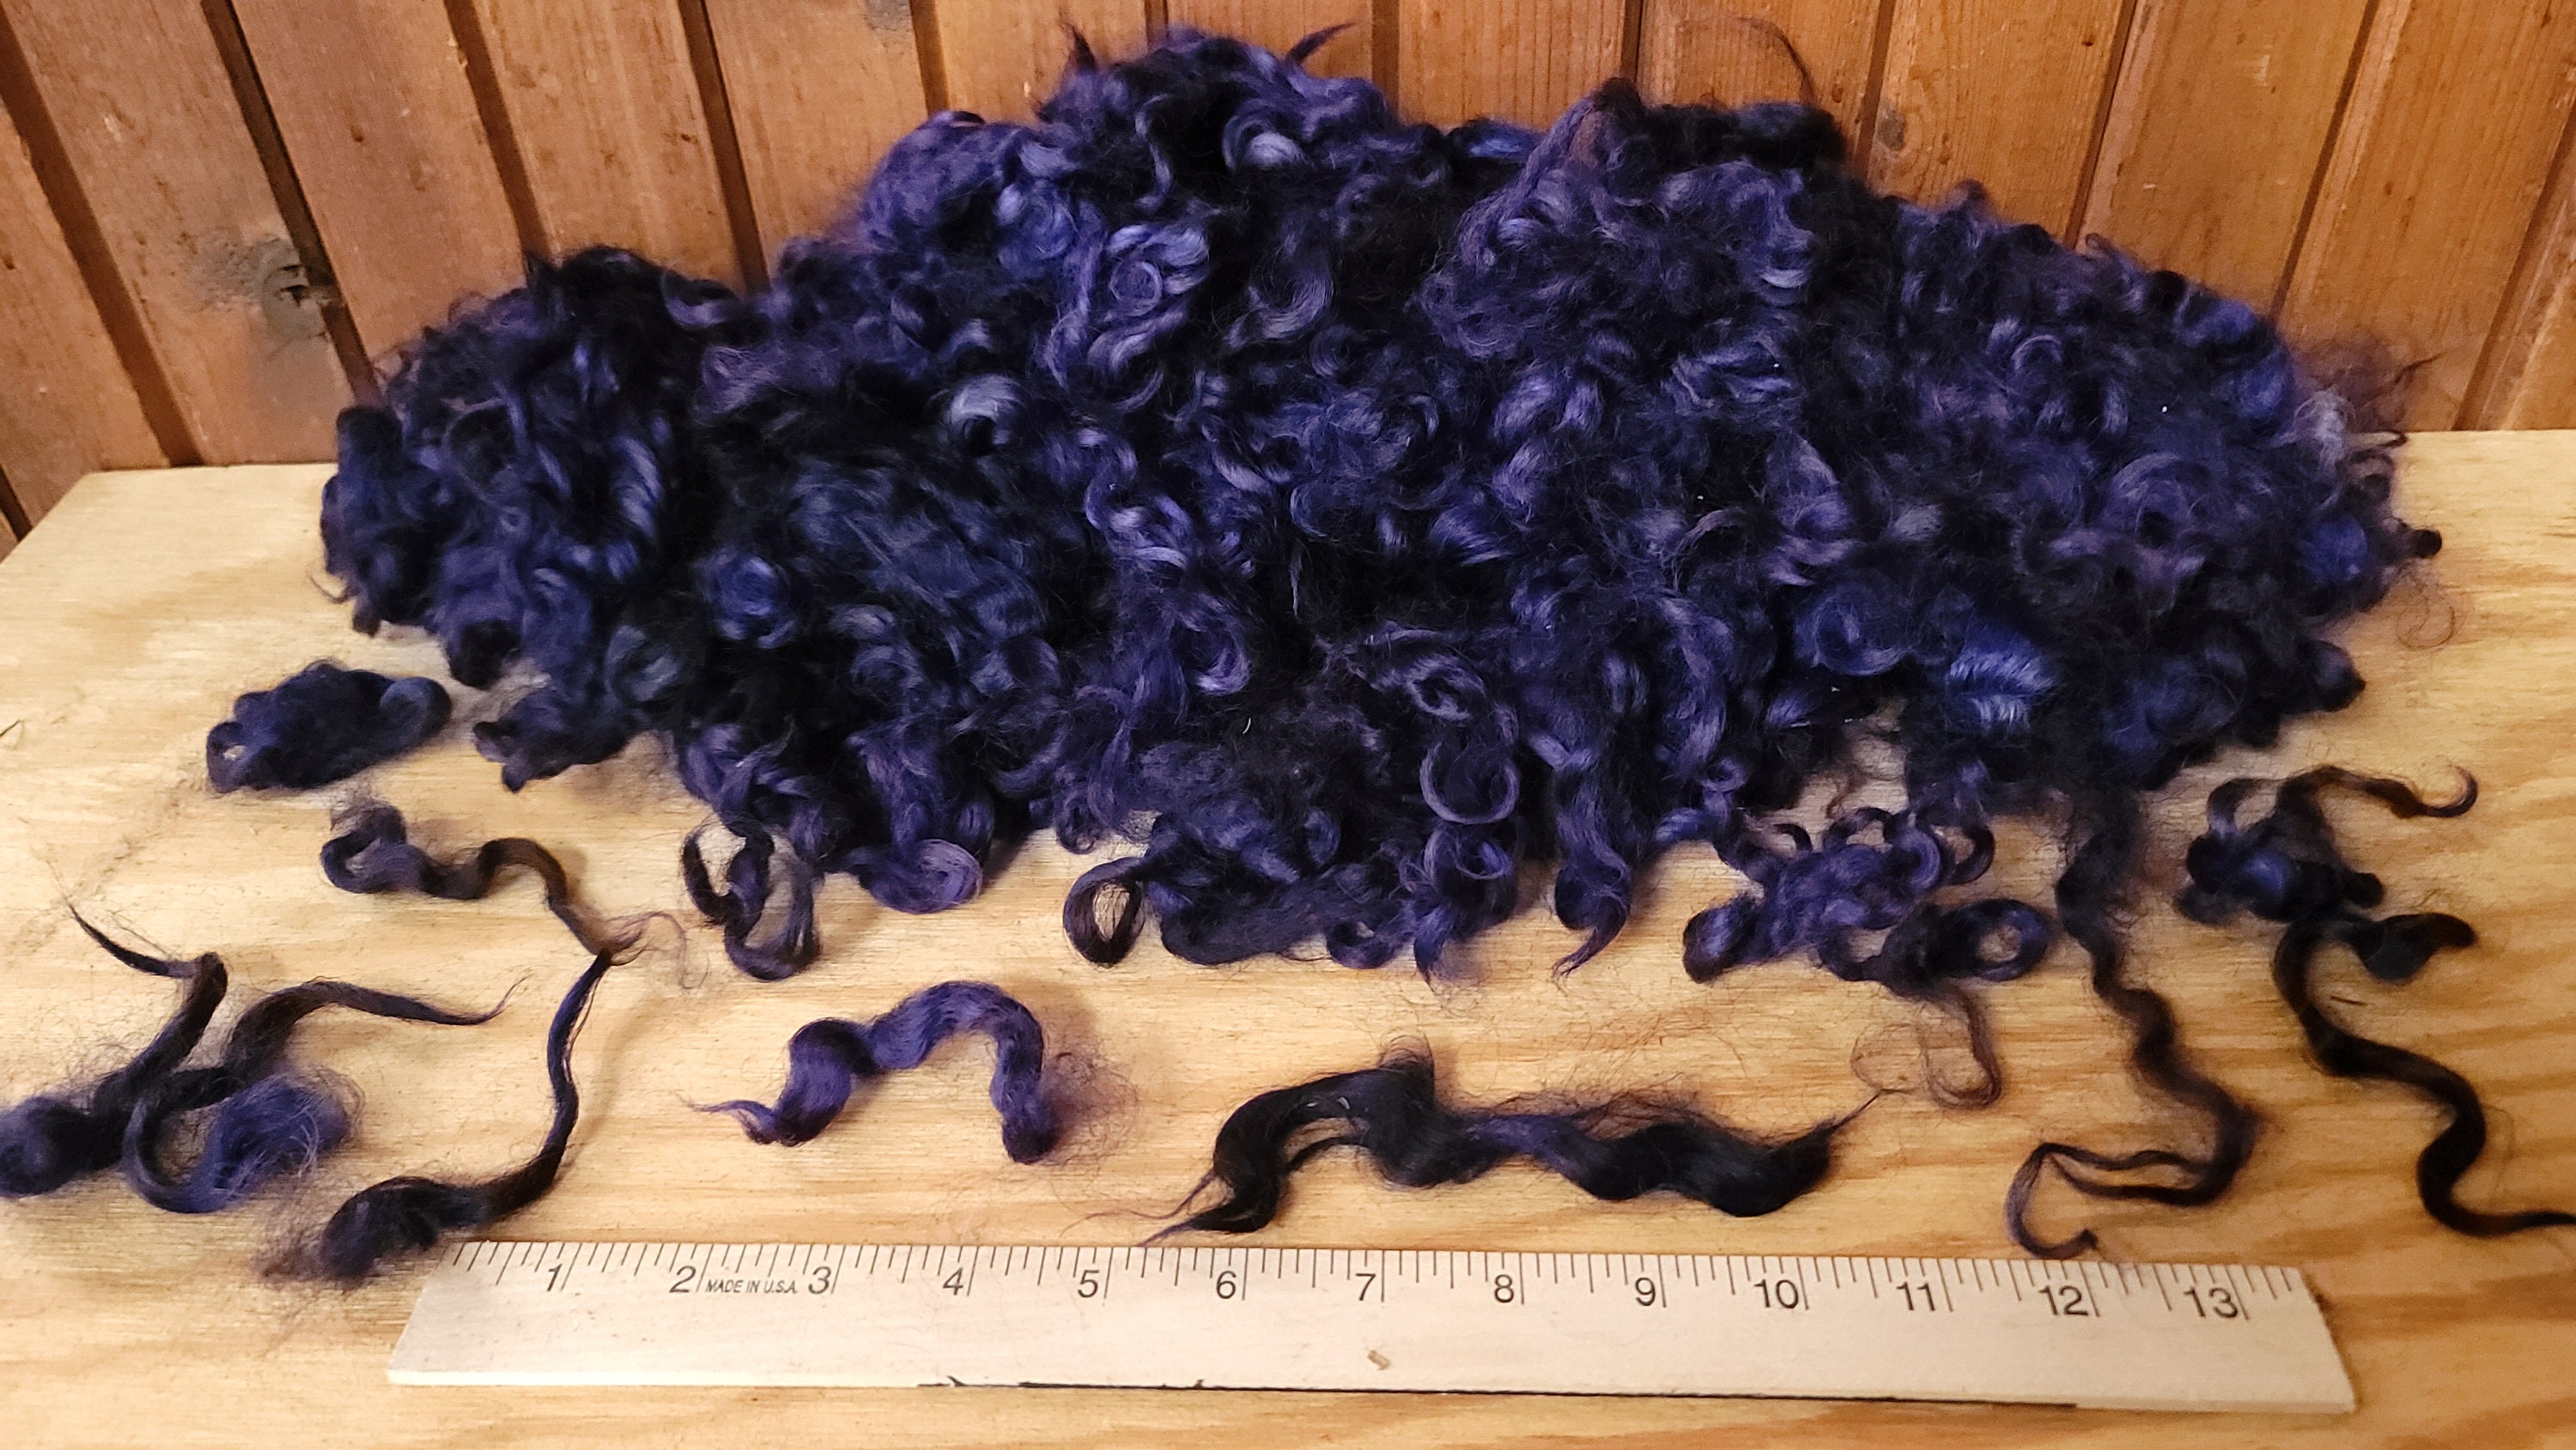 1 lb. Core wool for needle felting Off white for needle felting